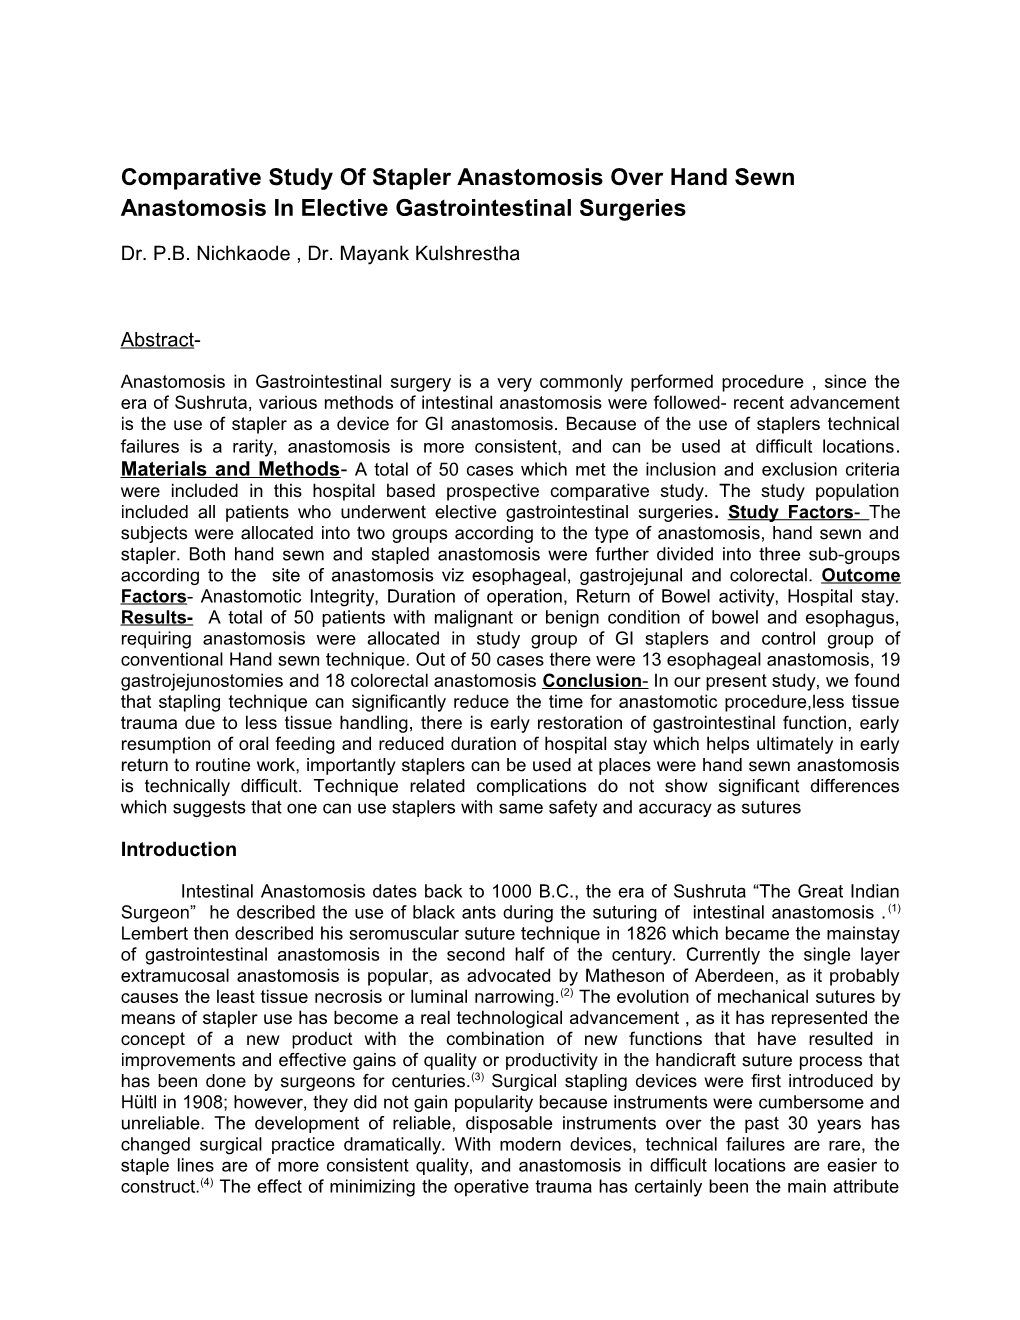 Comparative Study of Stapler Anastomosis Over Hand Sewn Anastomosis in Elective